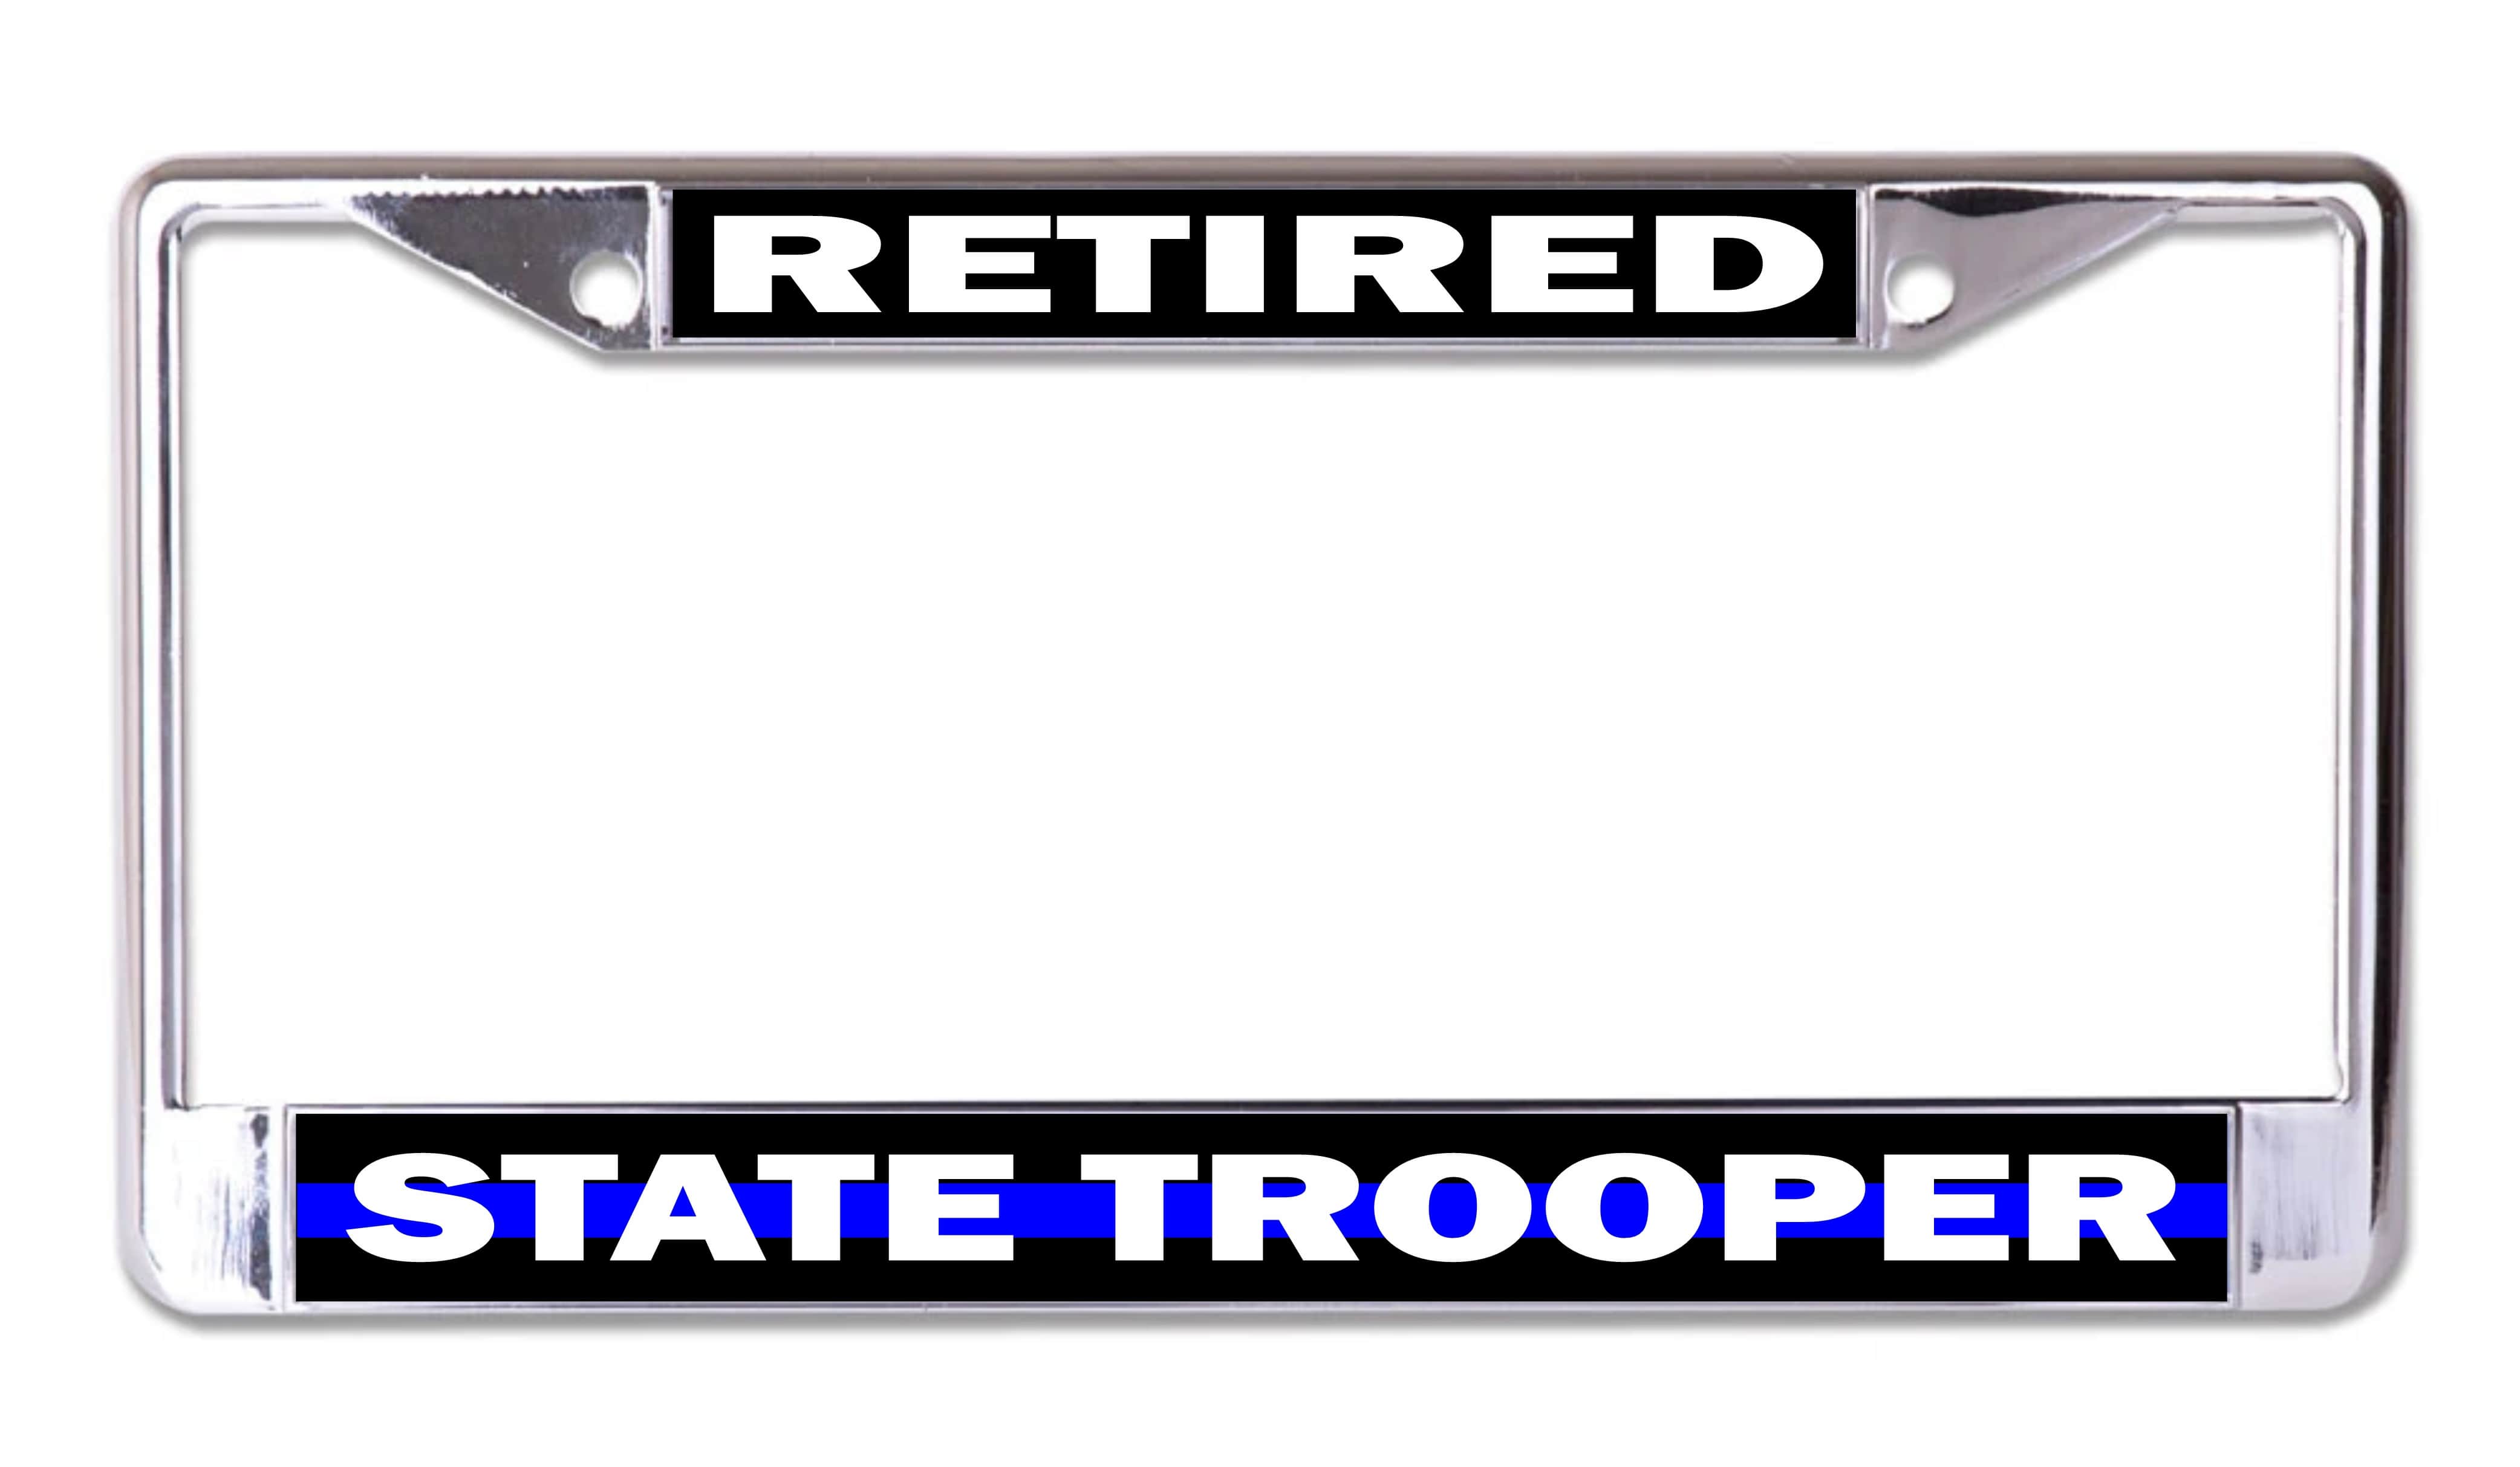 License Plates Online State Trooper Retired Blue Line Chrome License Plate Frame